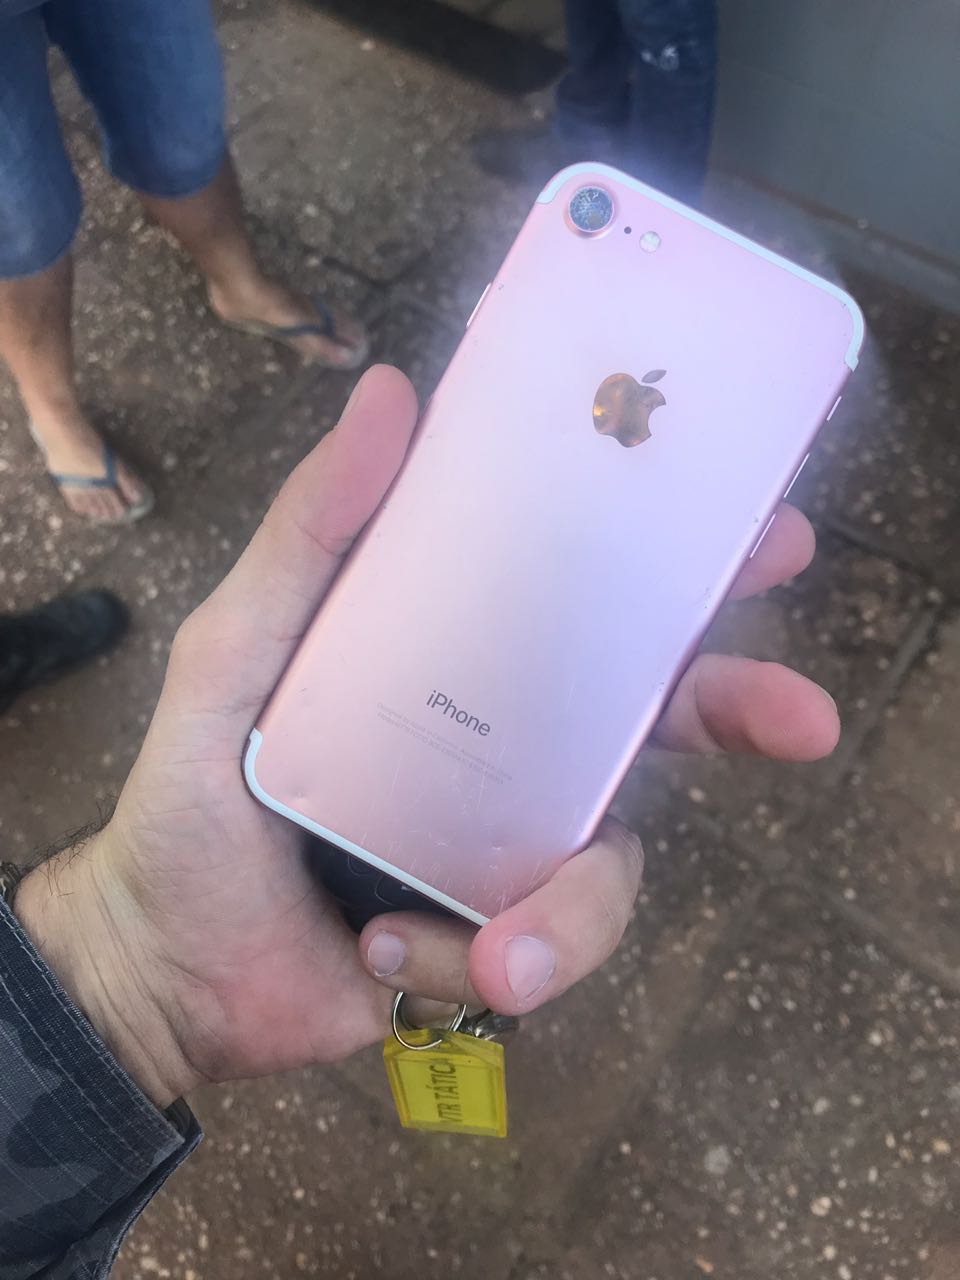 Celular Iphone 7 roubado no bairro Lourival Parente